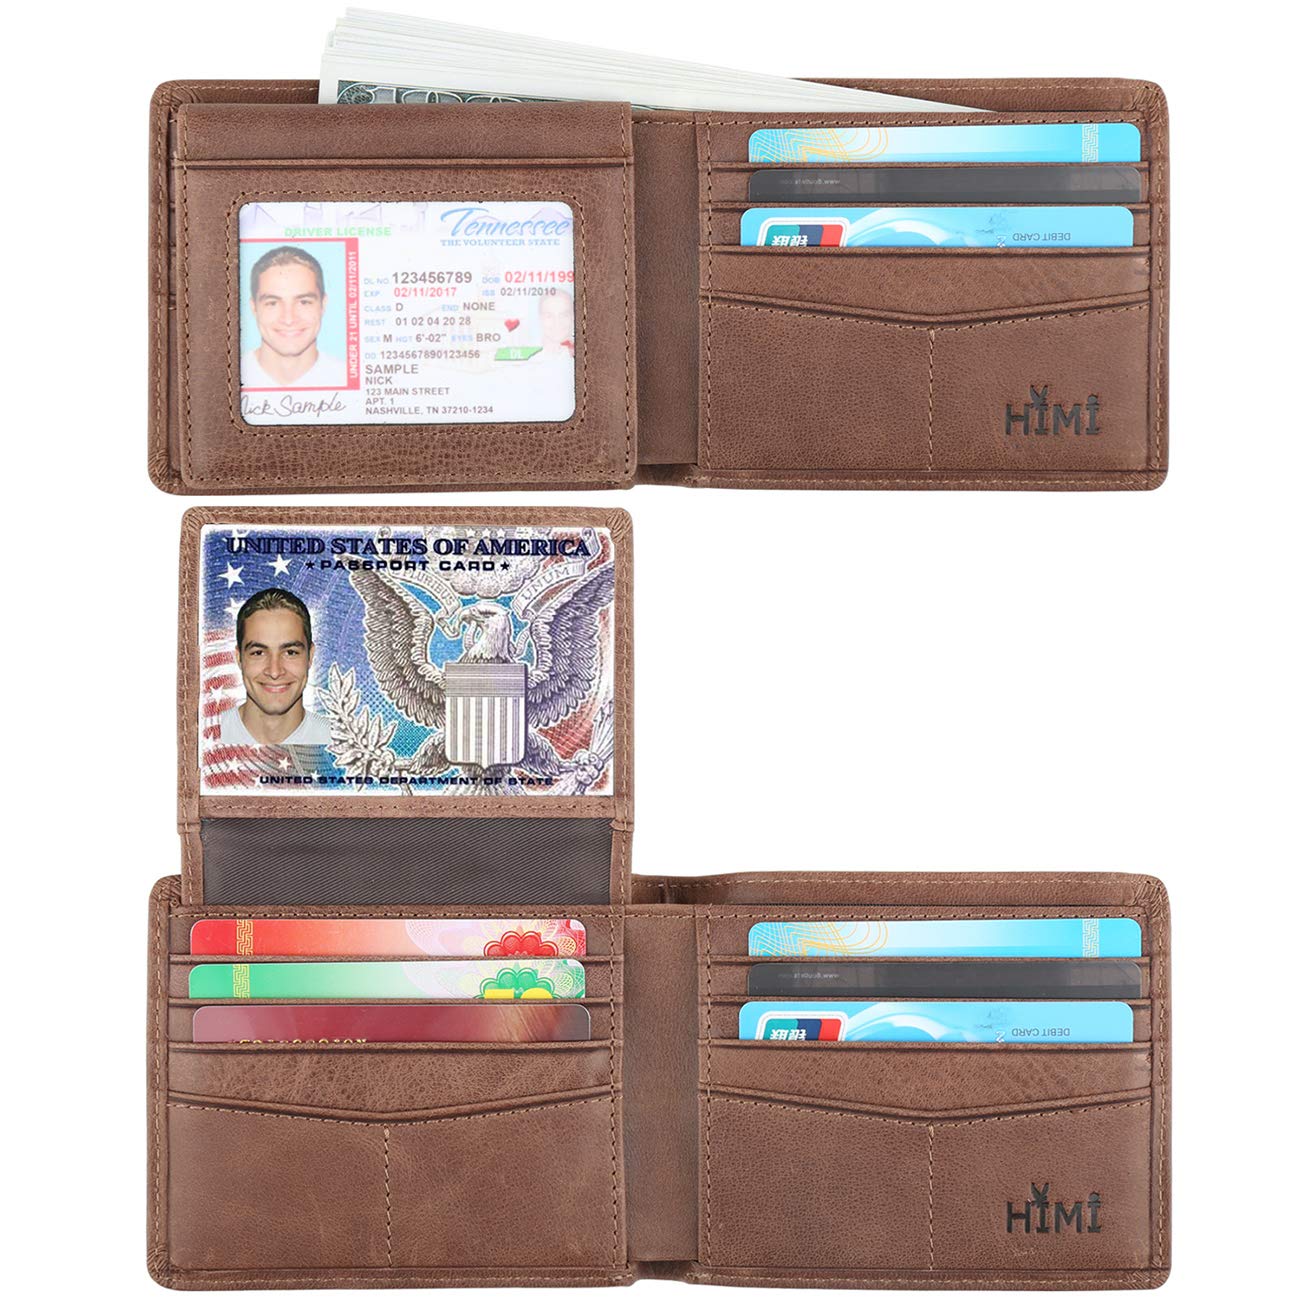 HIMI Compact Leather RFID Blocking Vintage Wallet